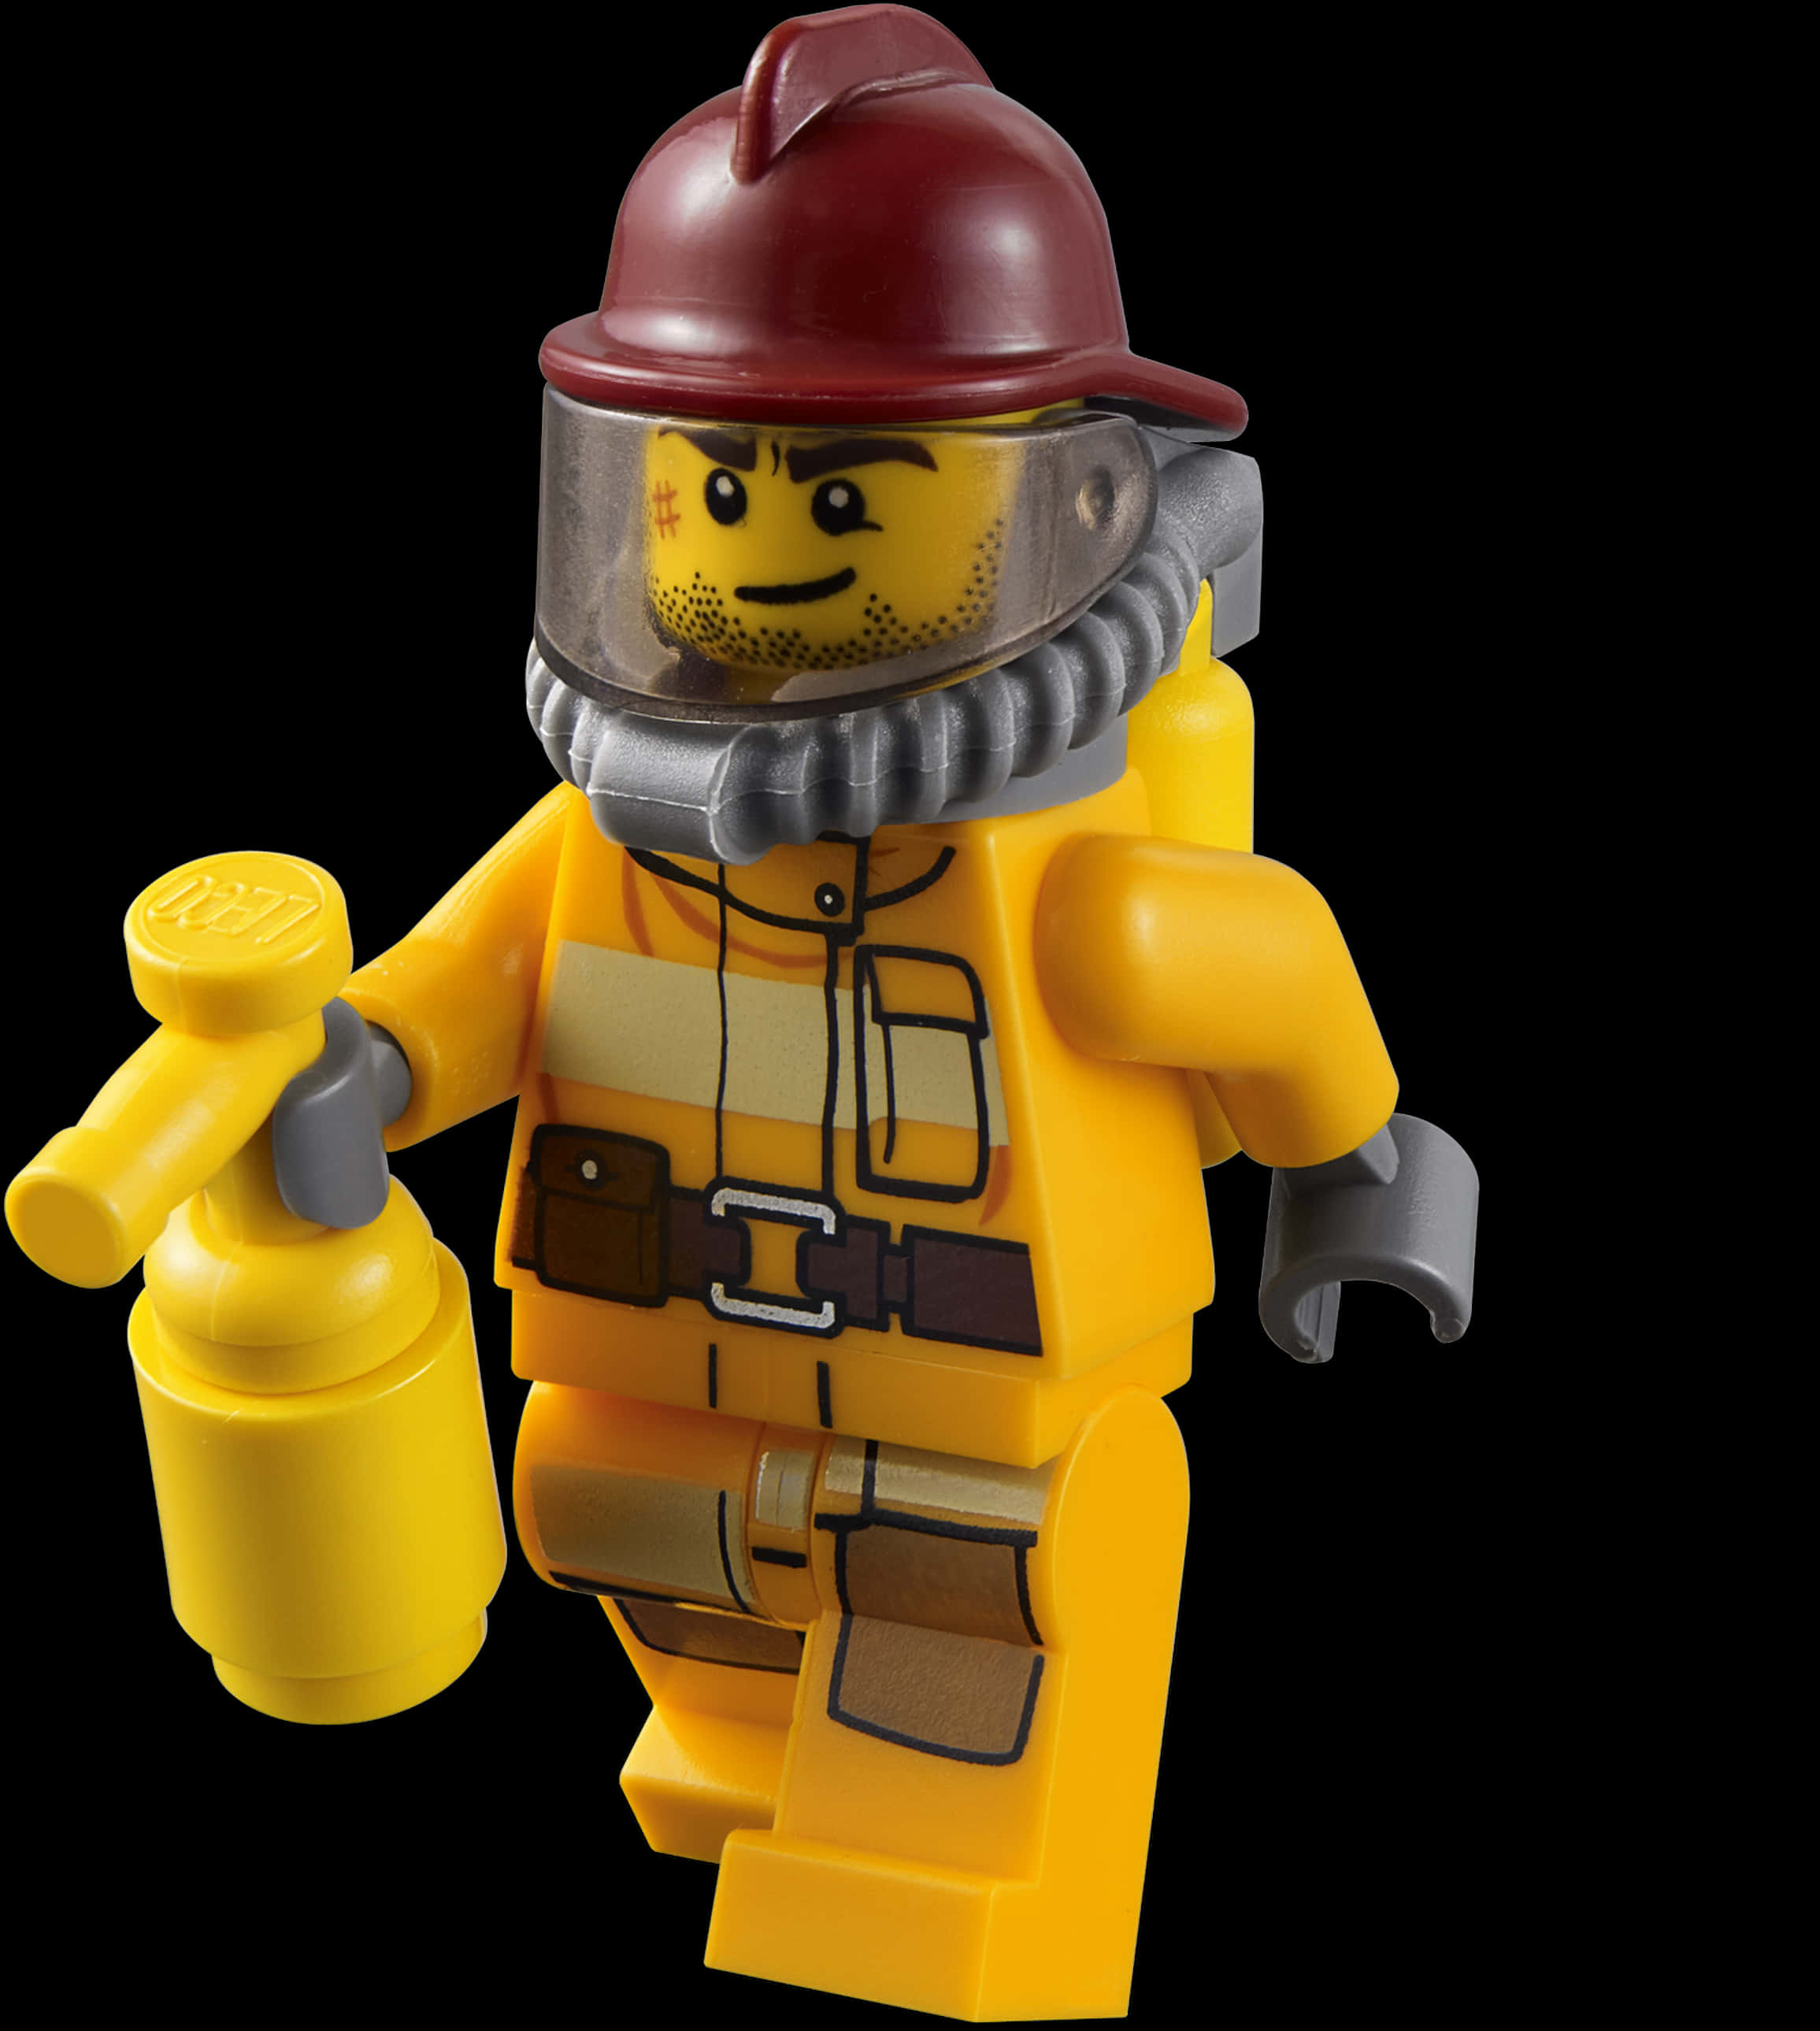 Lego Firefighter Minifigurewith Accessories SVG